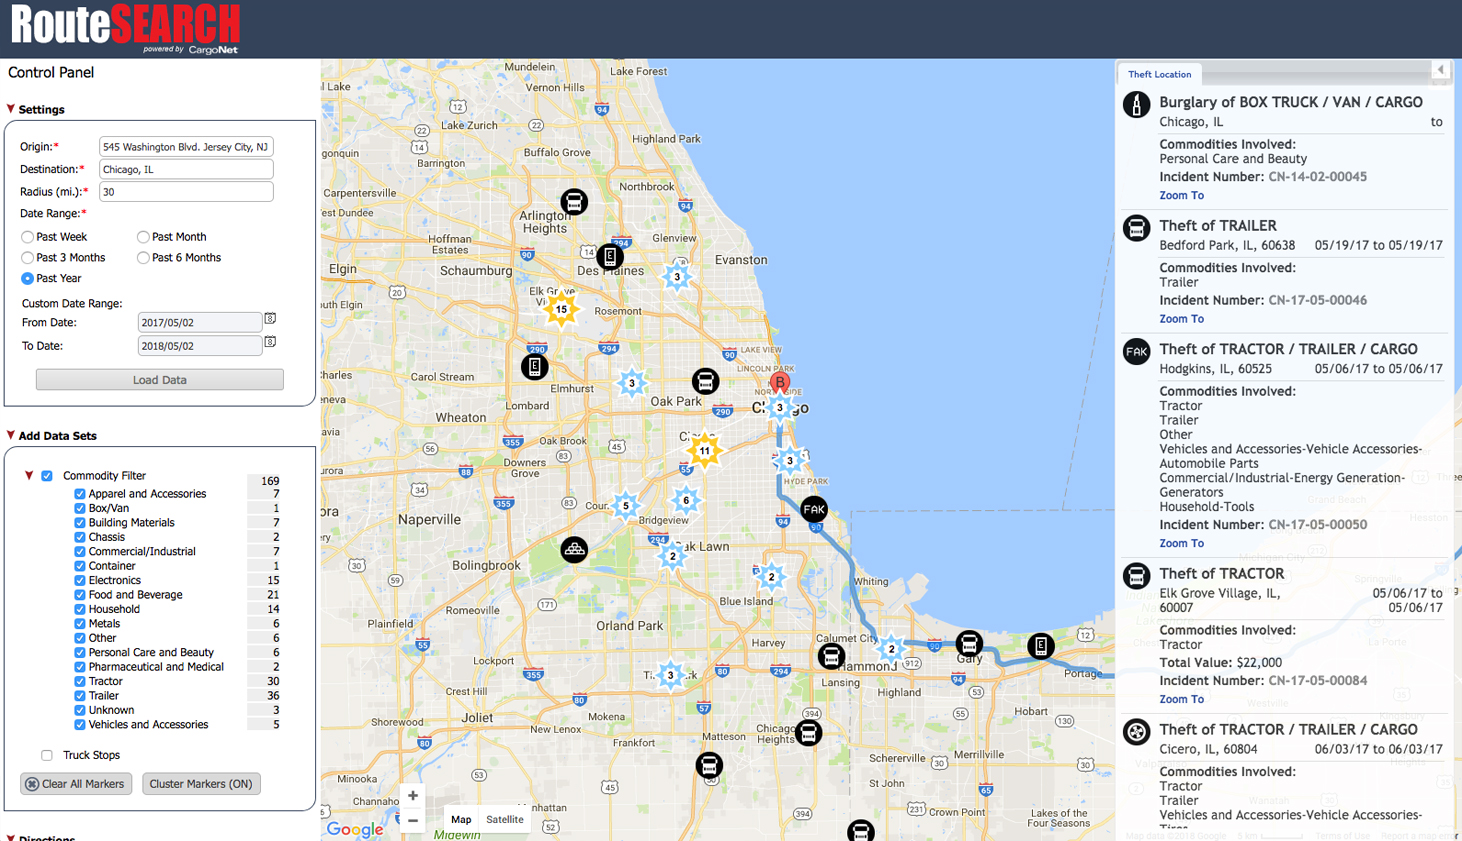 RouteSearch Screenshot Chicago